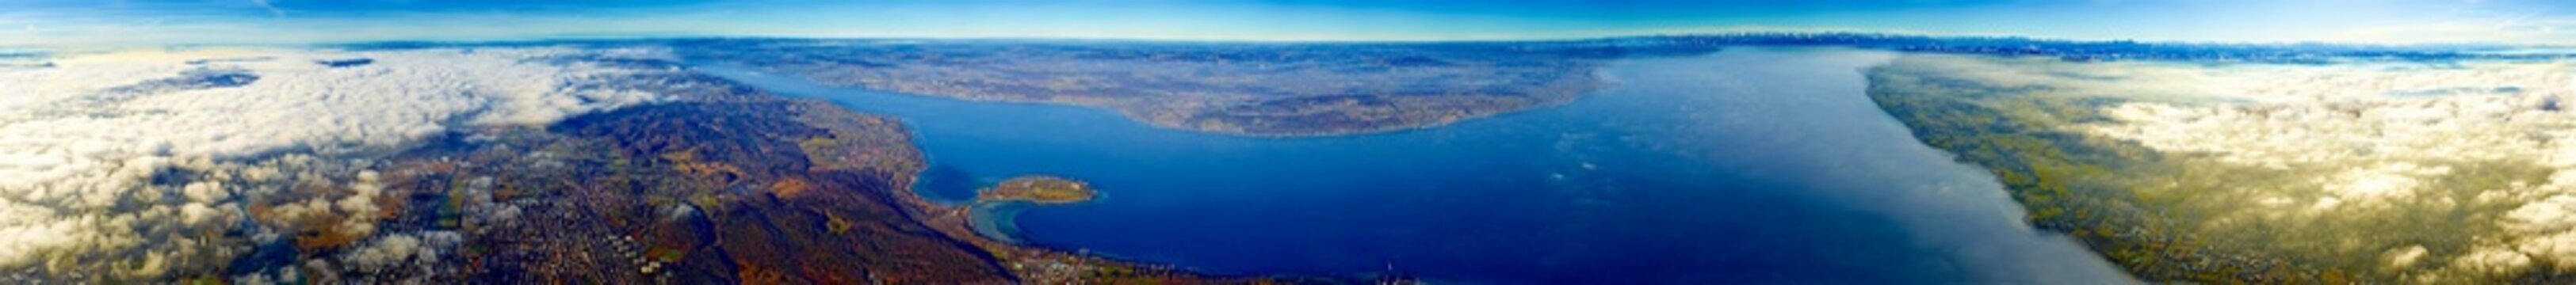 Sensationelles 360 Grad Panorama über dem Bodensee